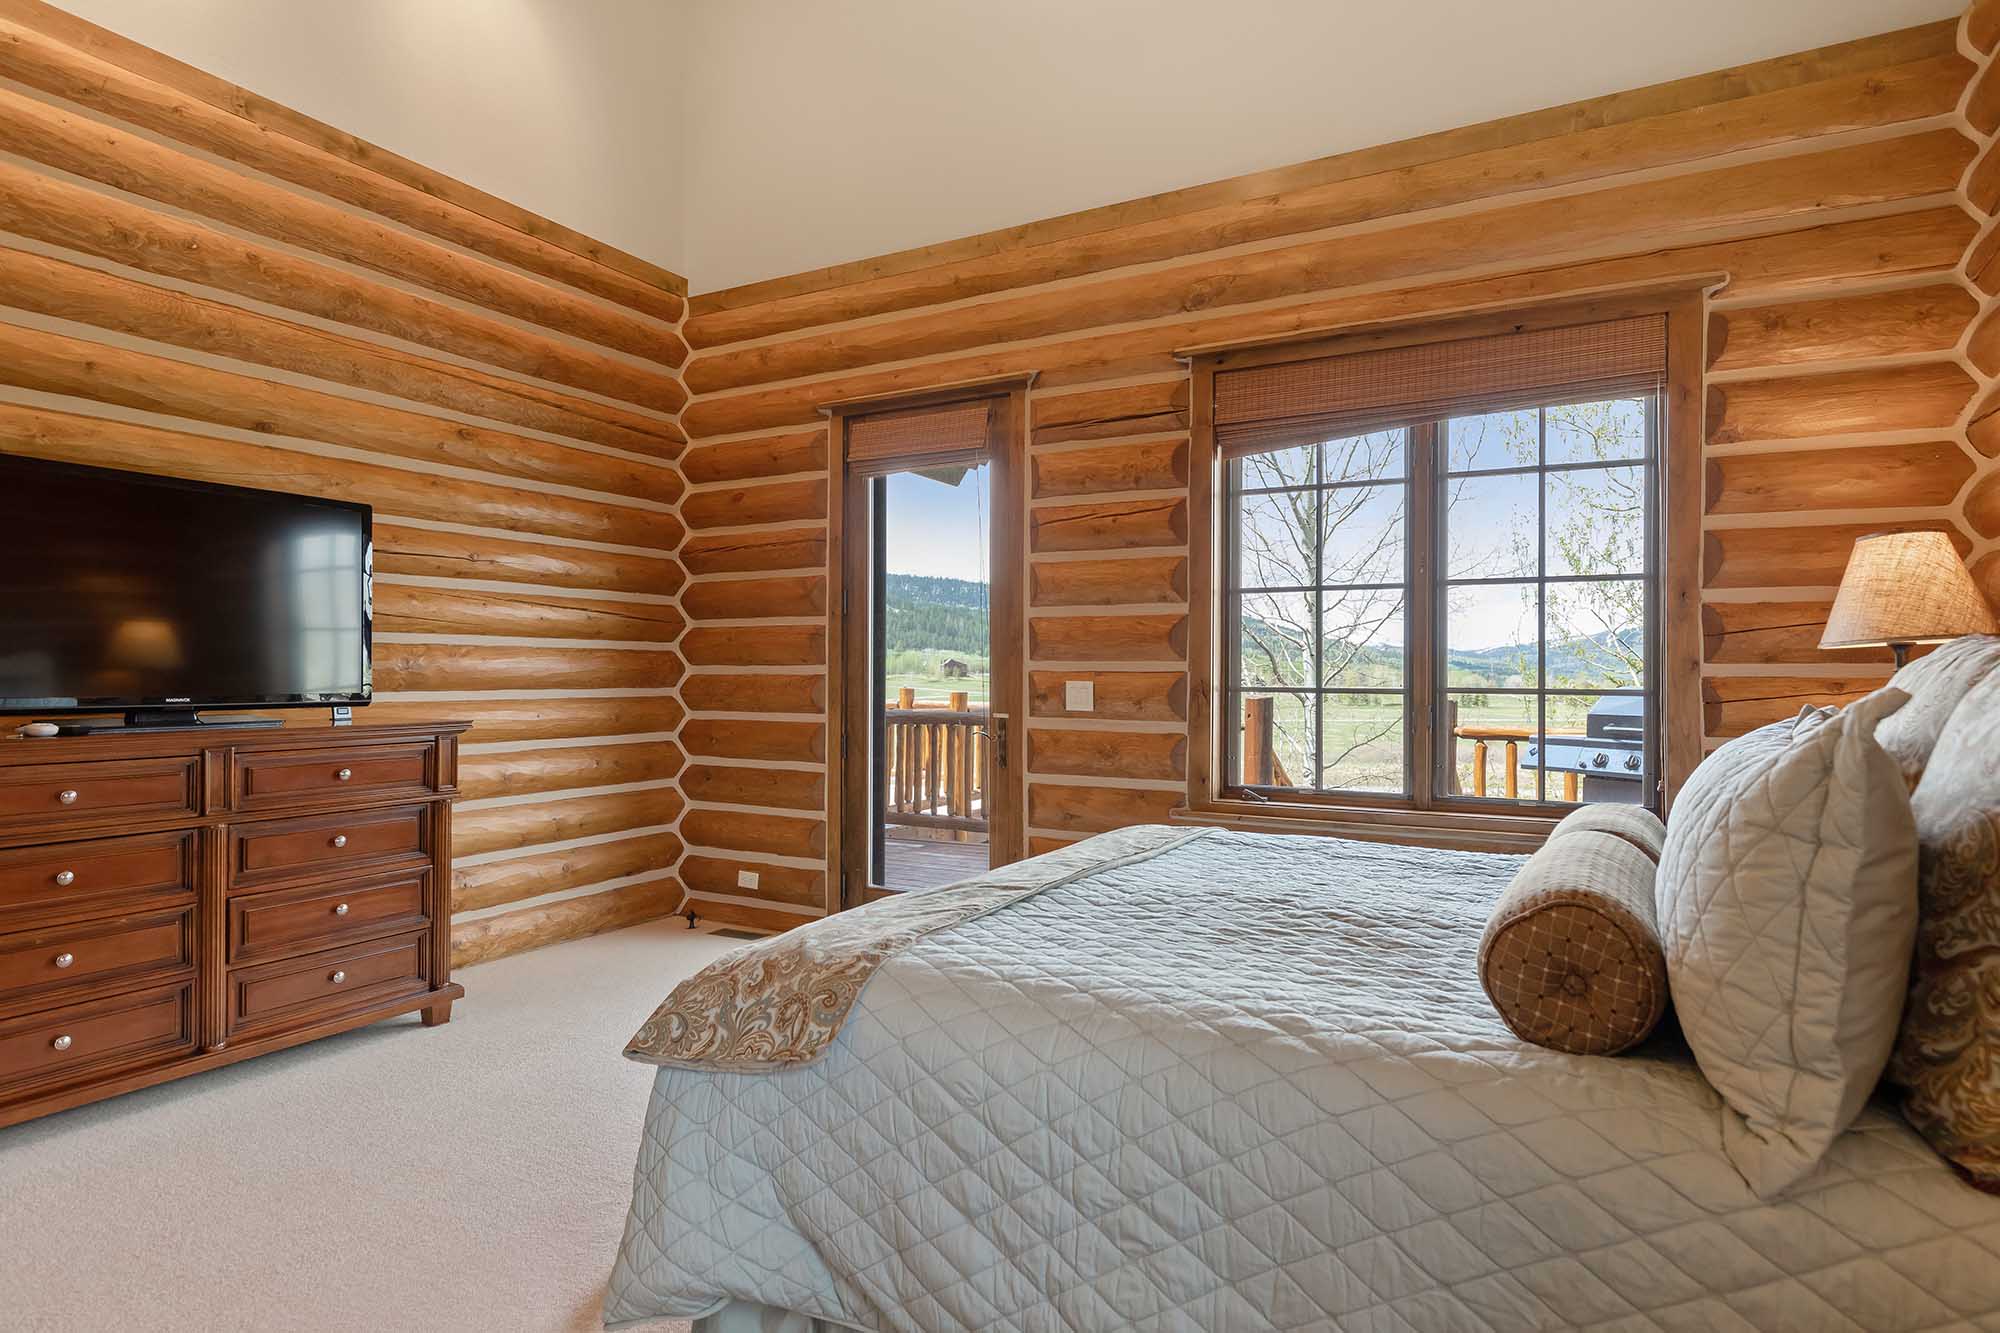 Rymell Log Cabin - 4 Bedroom - Teton Springs